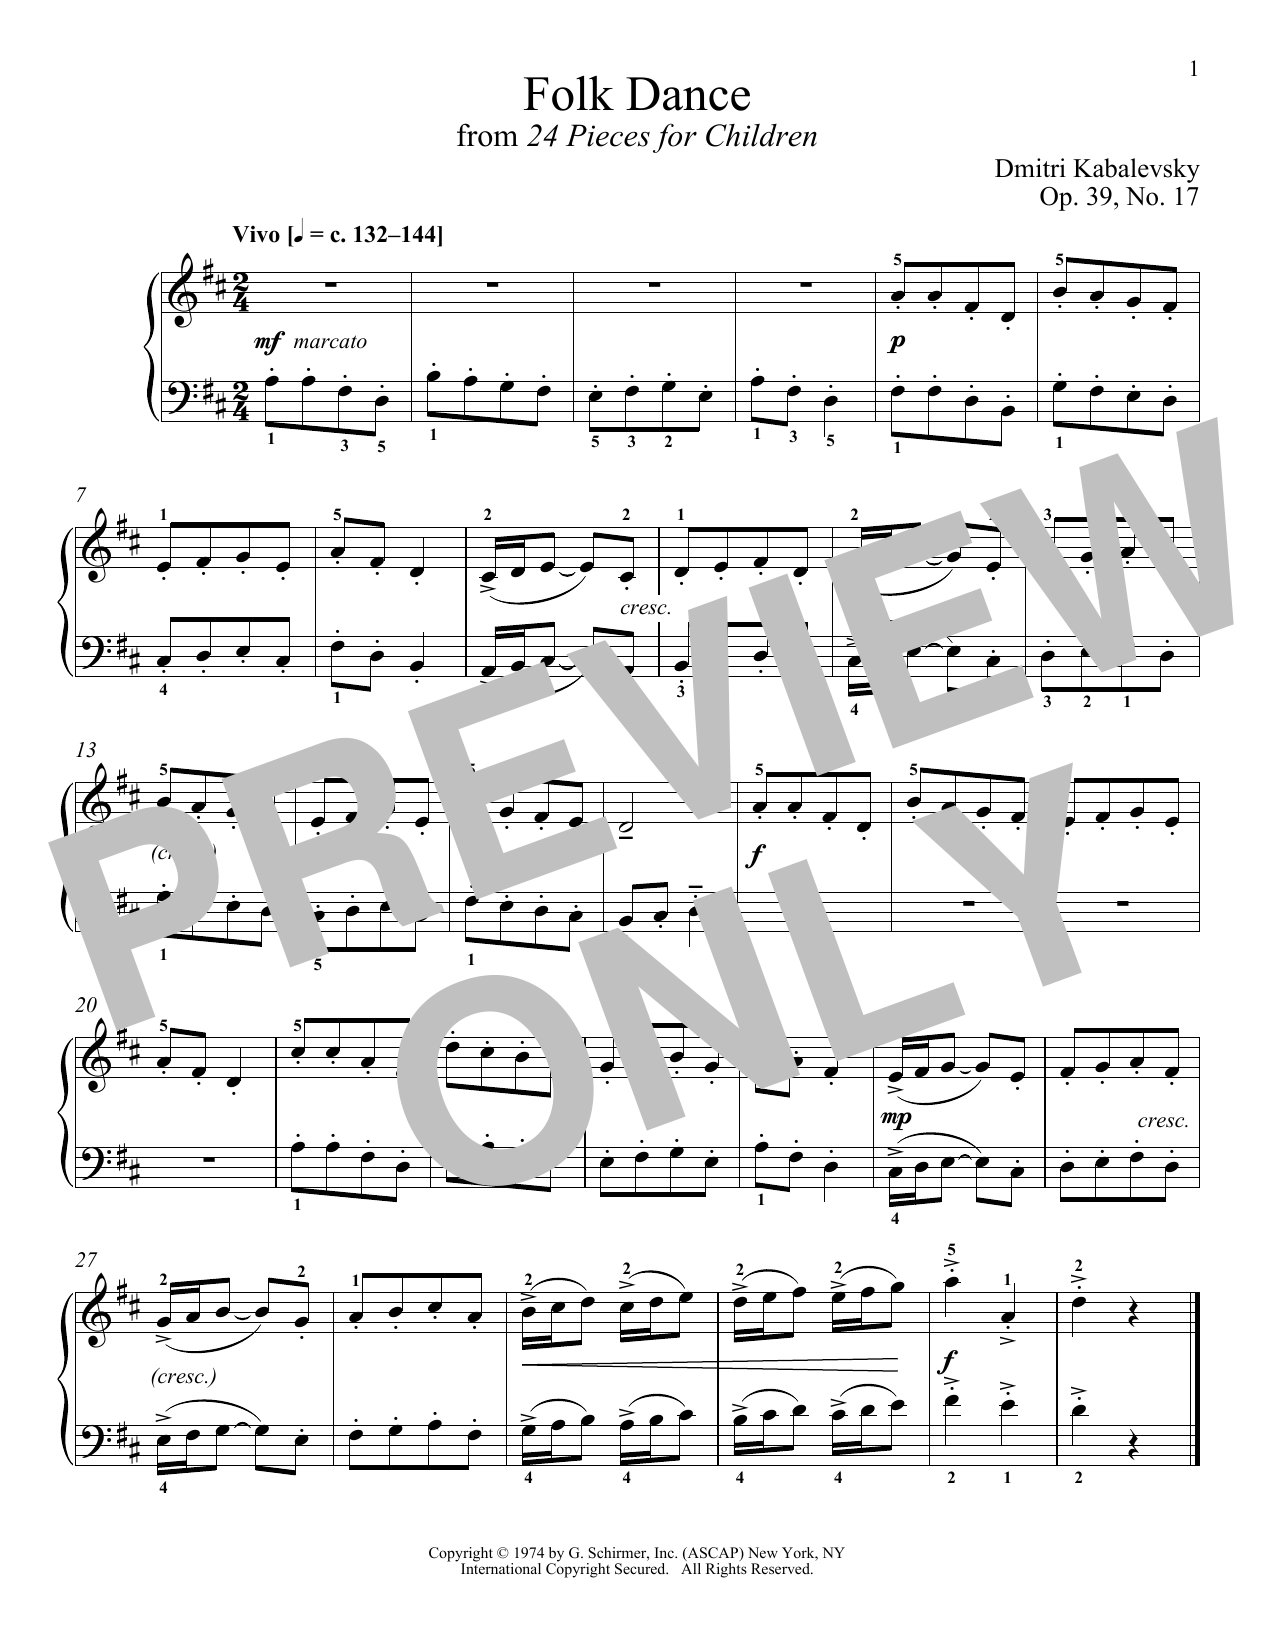 Dmitri Kabalevsky Folk Dance, Op. 39, No. 17 Sheet Music Notes & Chords for Piano - Download or Print PDF